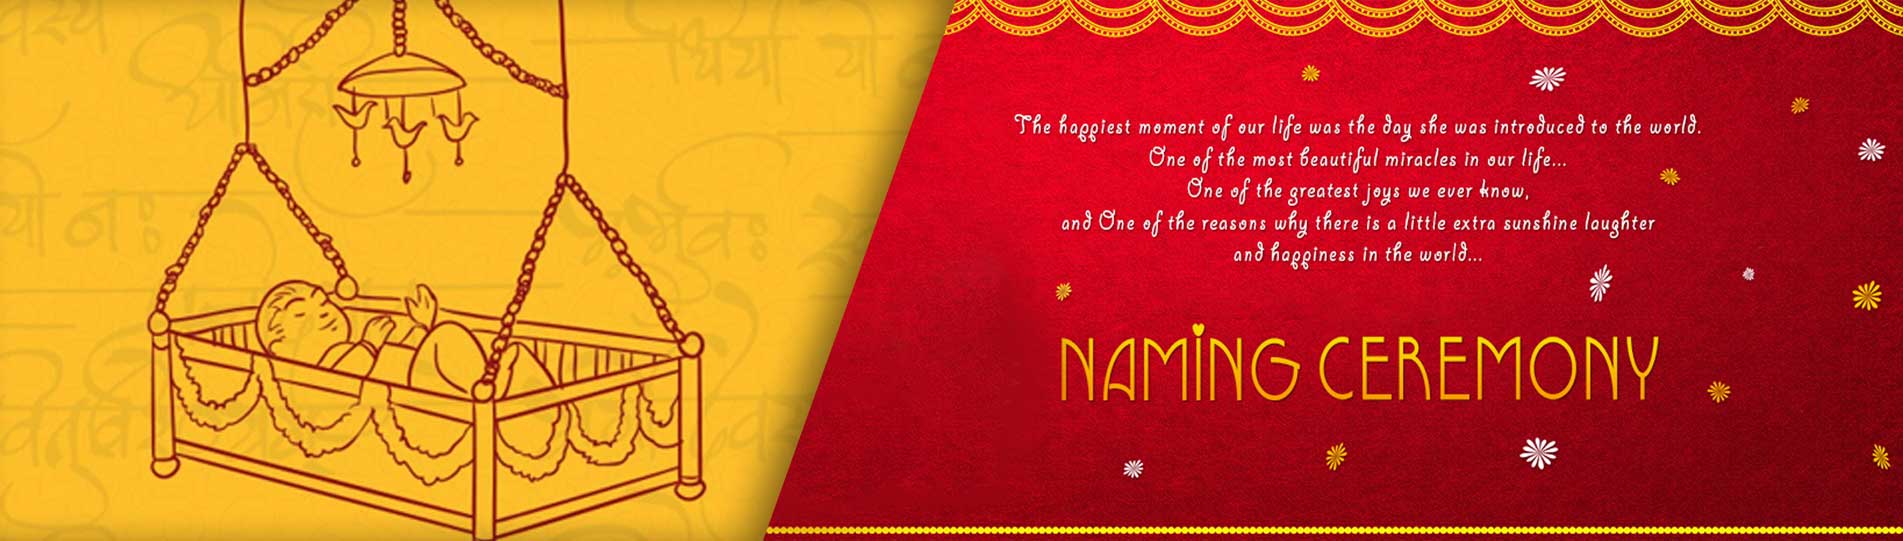 Resorts for Naming Ceremony | Resorts to Celebrate Naming ...